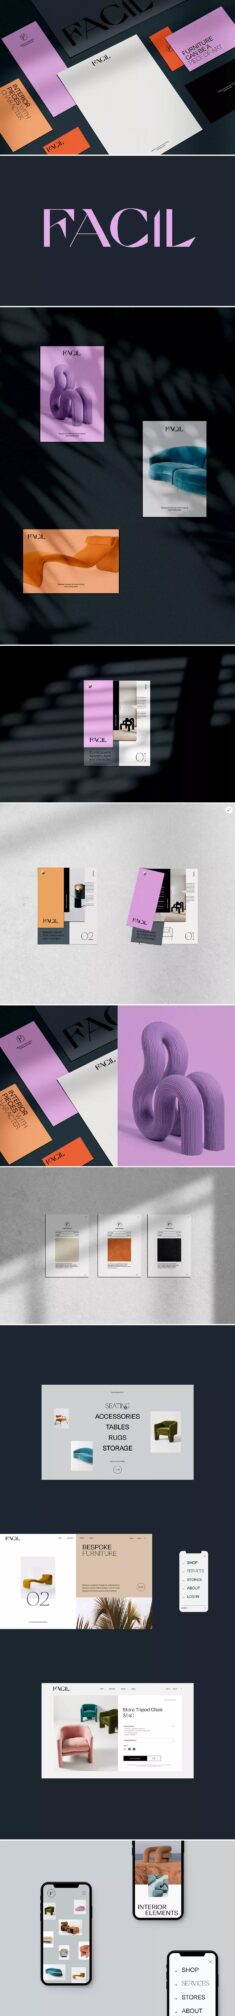 Facil furniture brand identity design by Elisabeth Kiviorg